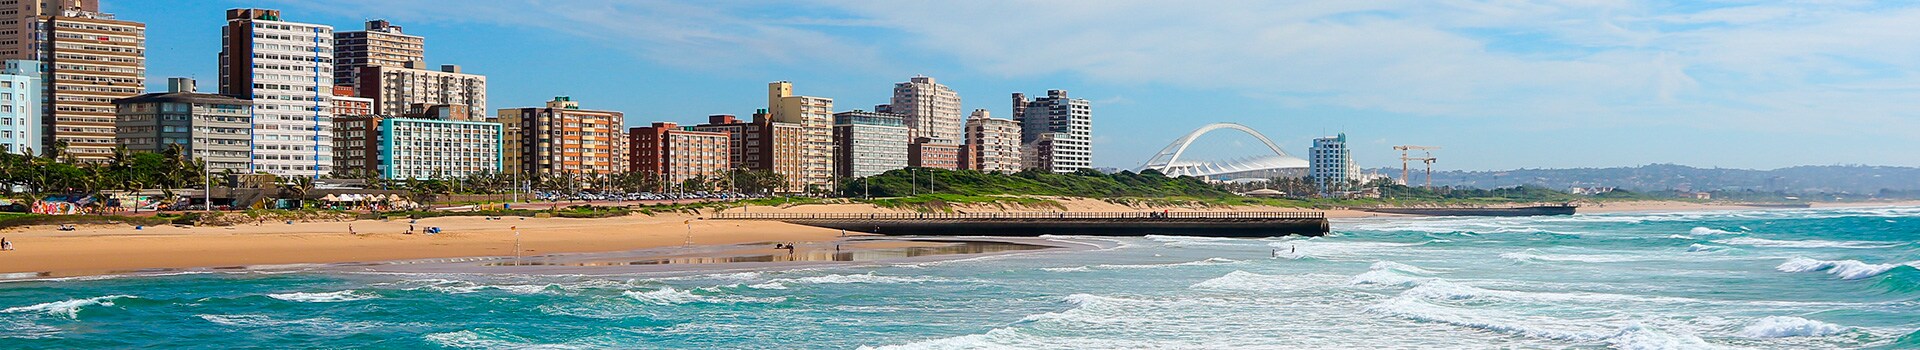 Lisbon - Durban